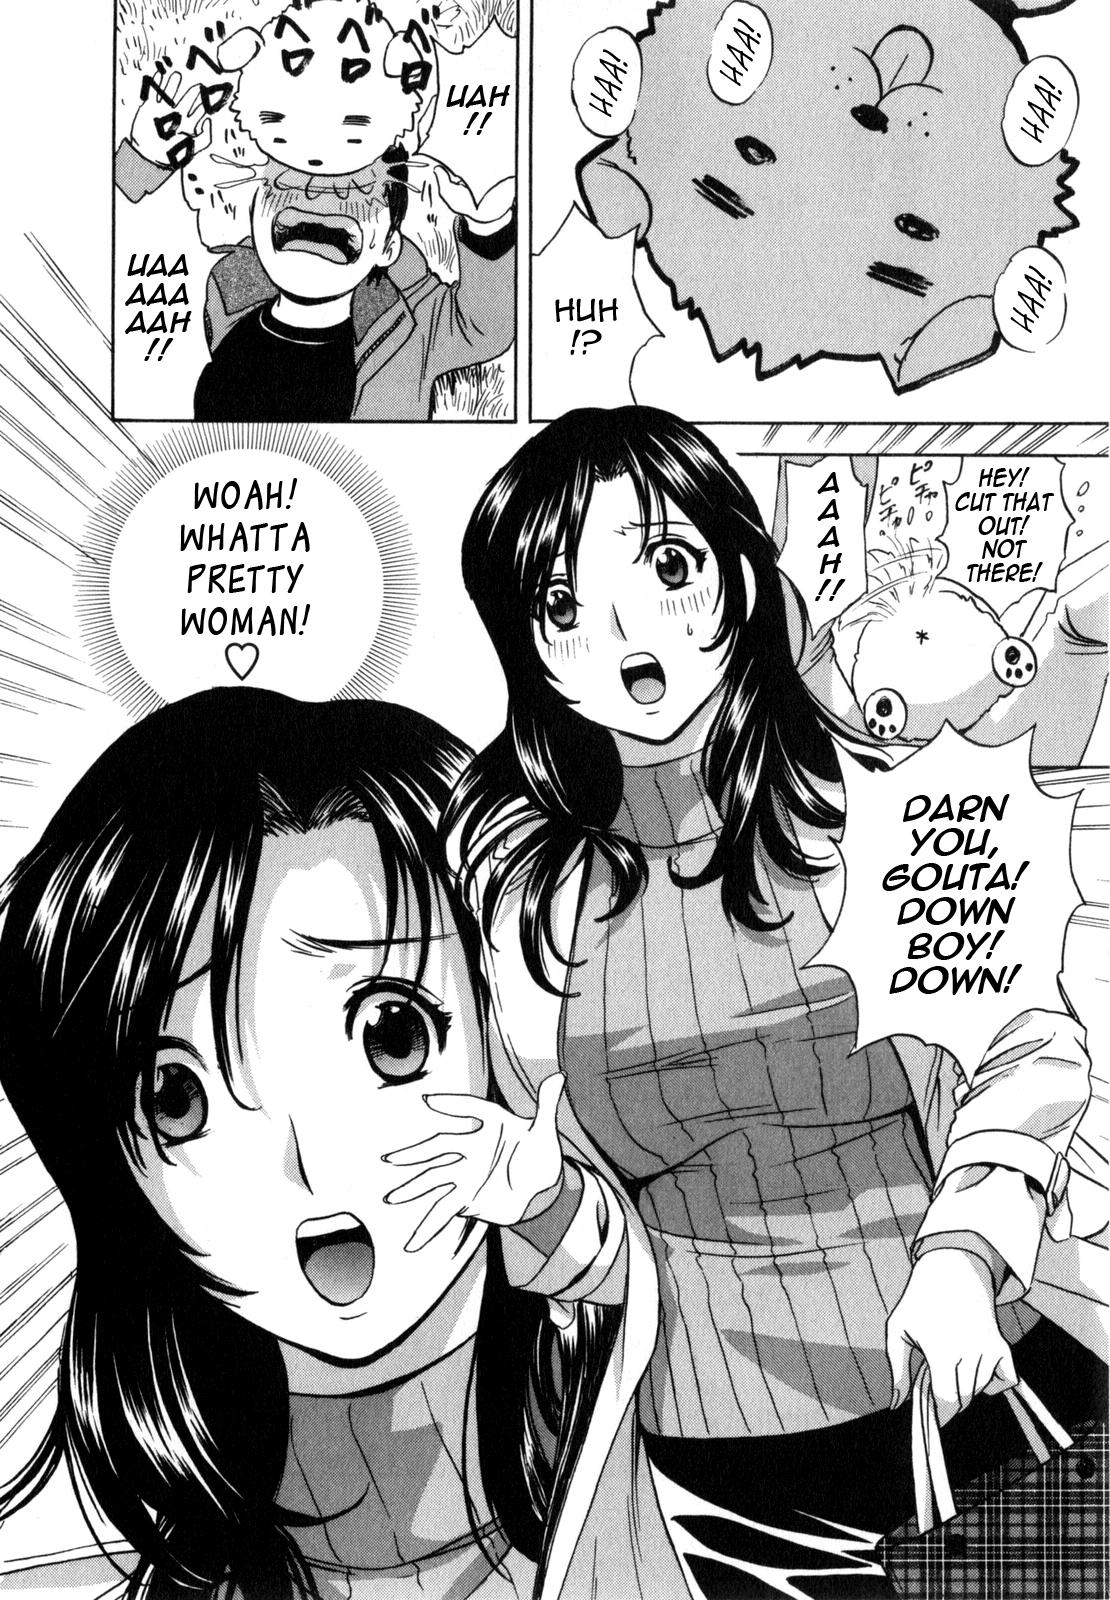 [Hidemaru] Life with Married Women Just Like a Manga 1 - Ch. 1-7 [English] {Tadanohito} 10